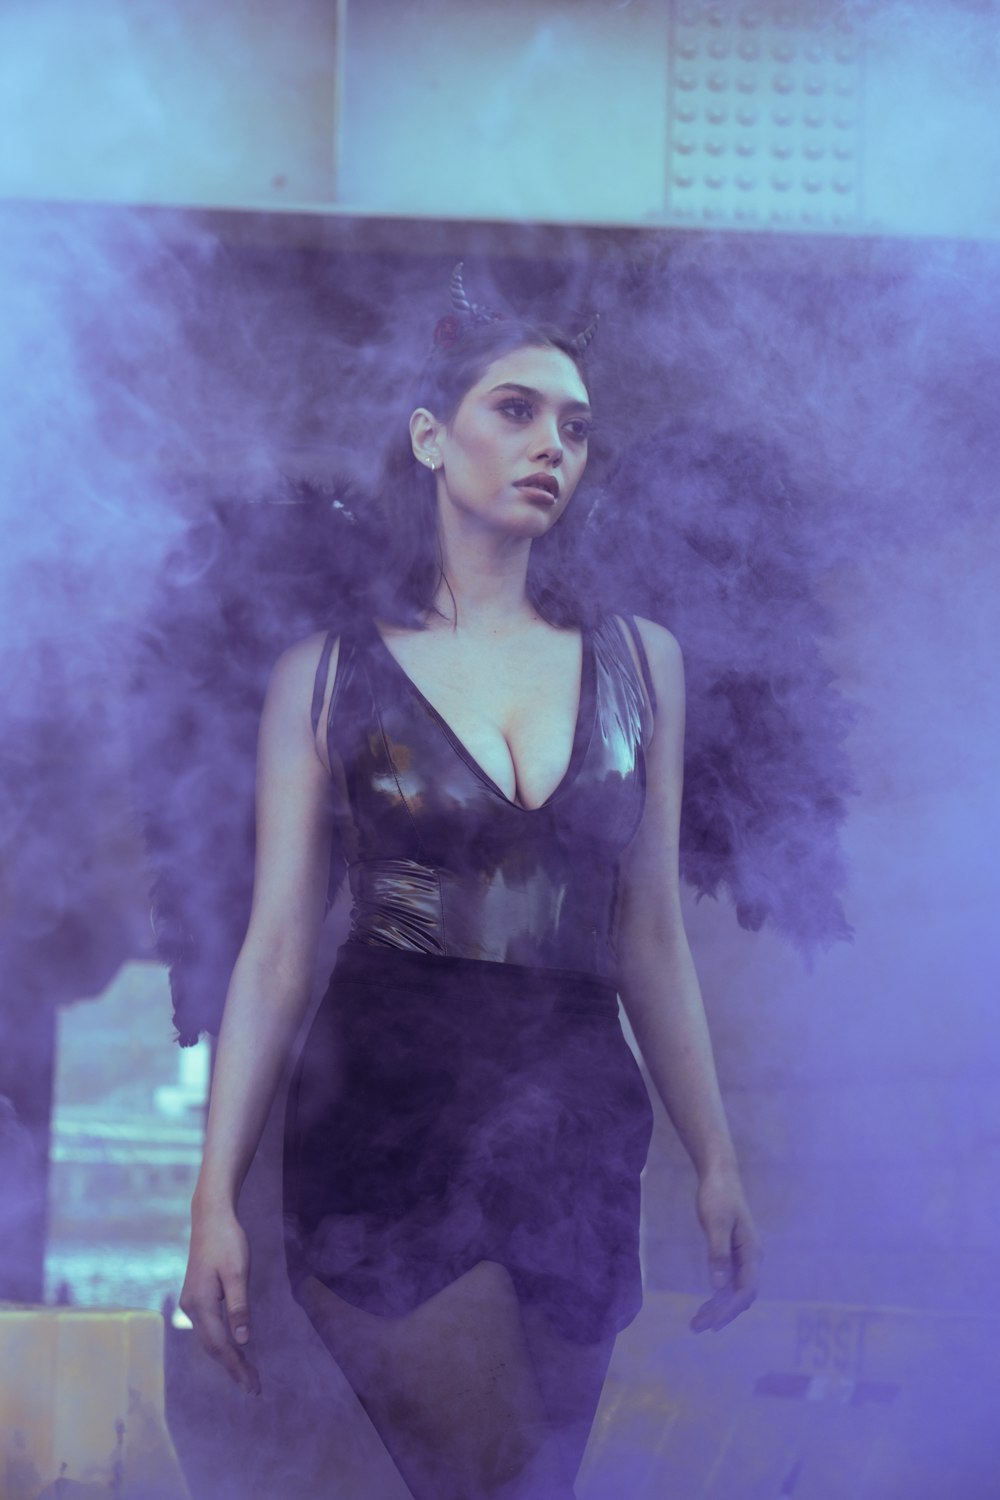 a woman in a black dress standing in smoke